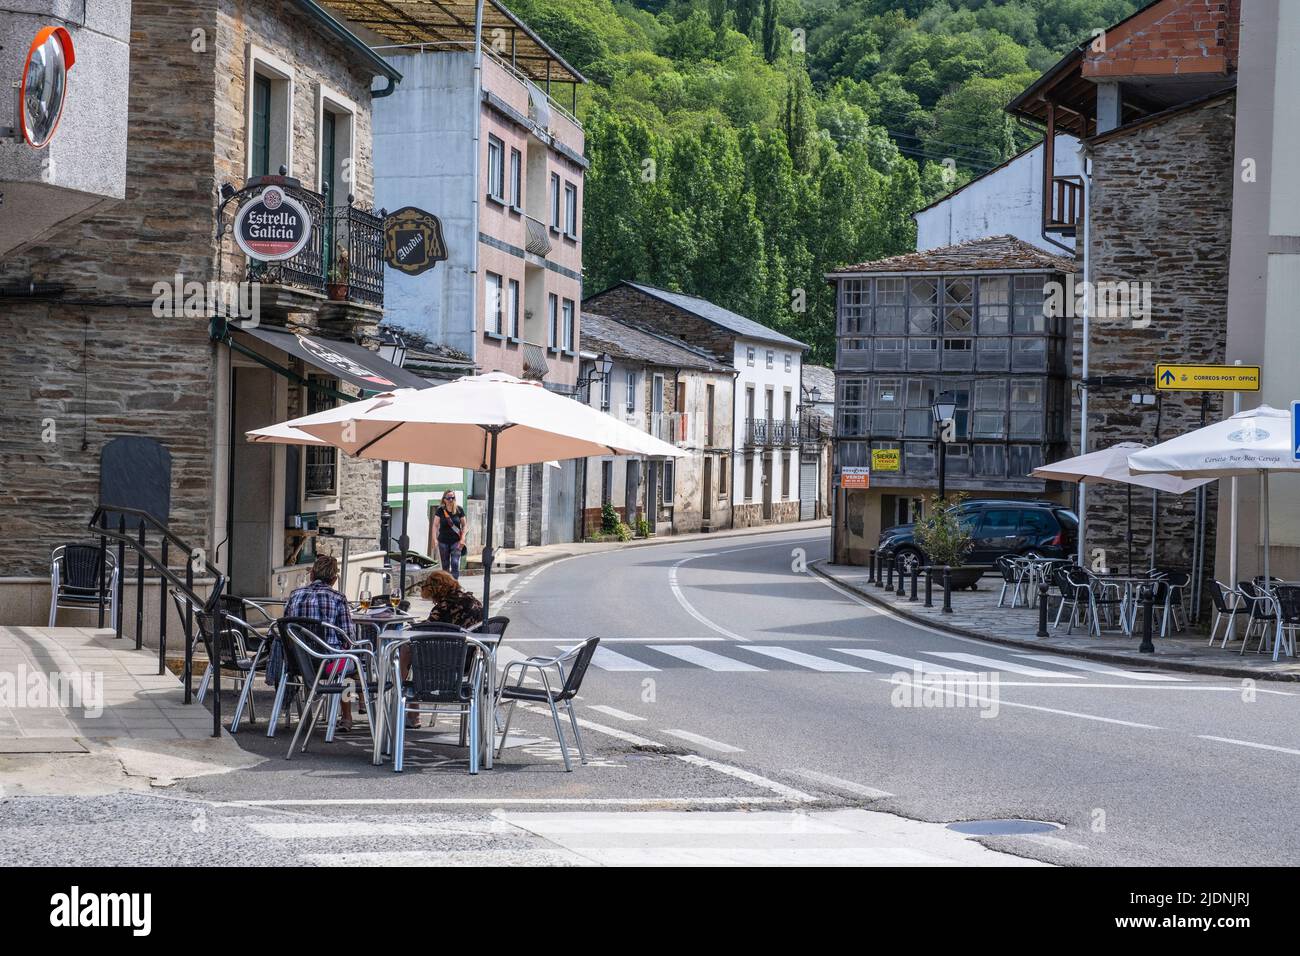 Spain, Galicia, Samos. Main Street Scene. Stock Photo